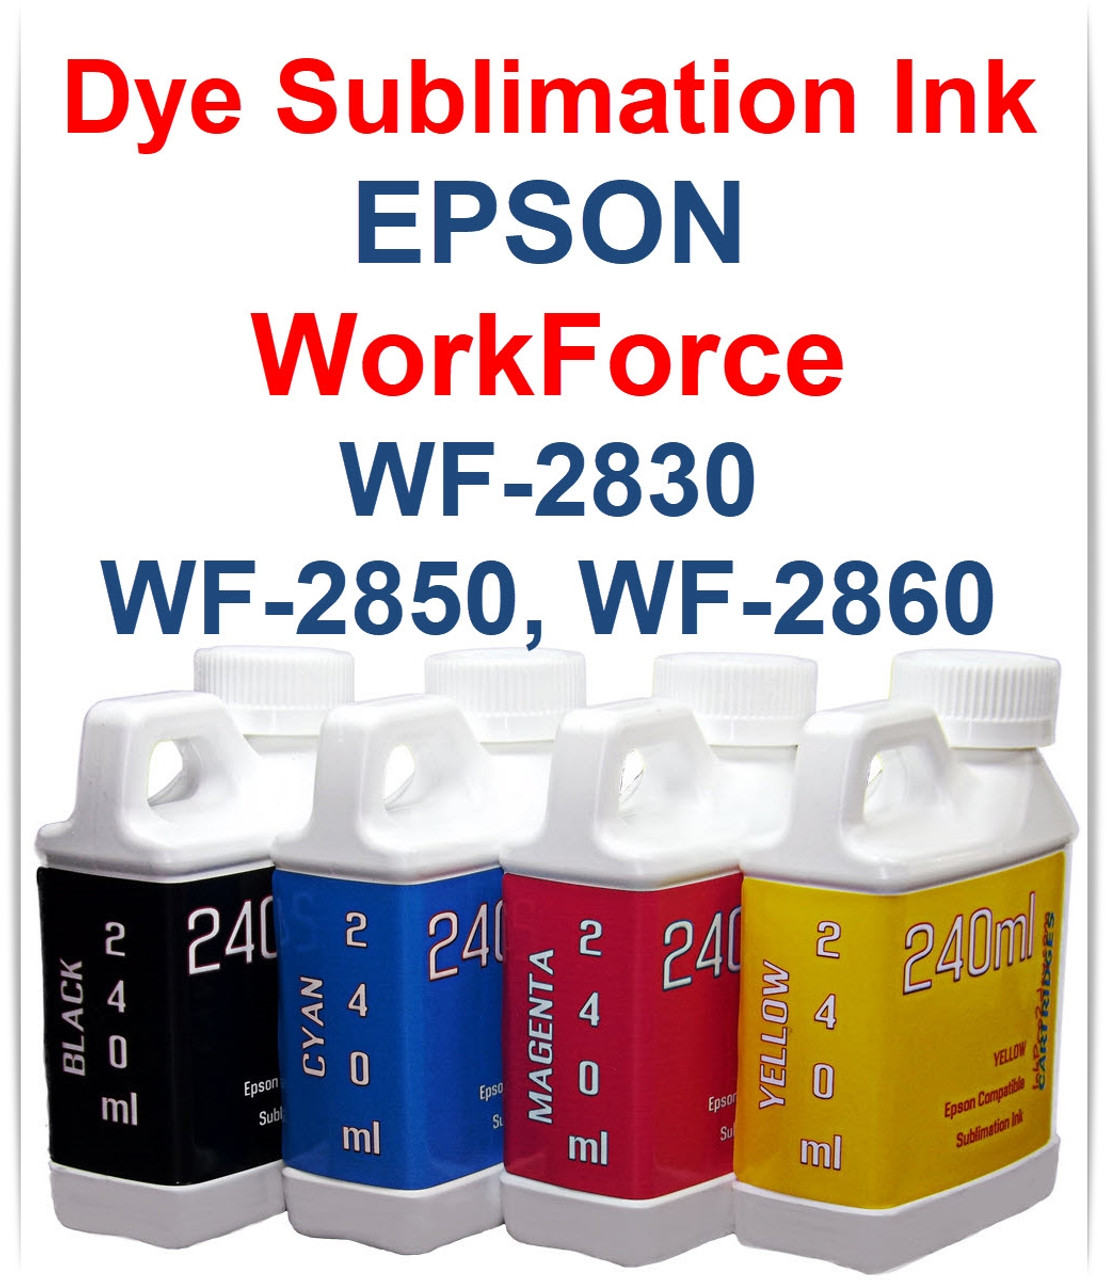 4- 240ml bottles Dye Sublimation Ink for Epson WorkForce WF-2830 WF-2850 WF-2860 Printers